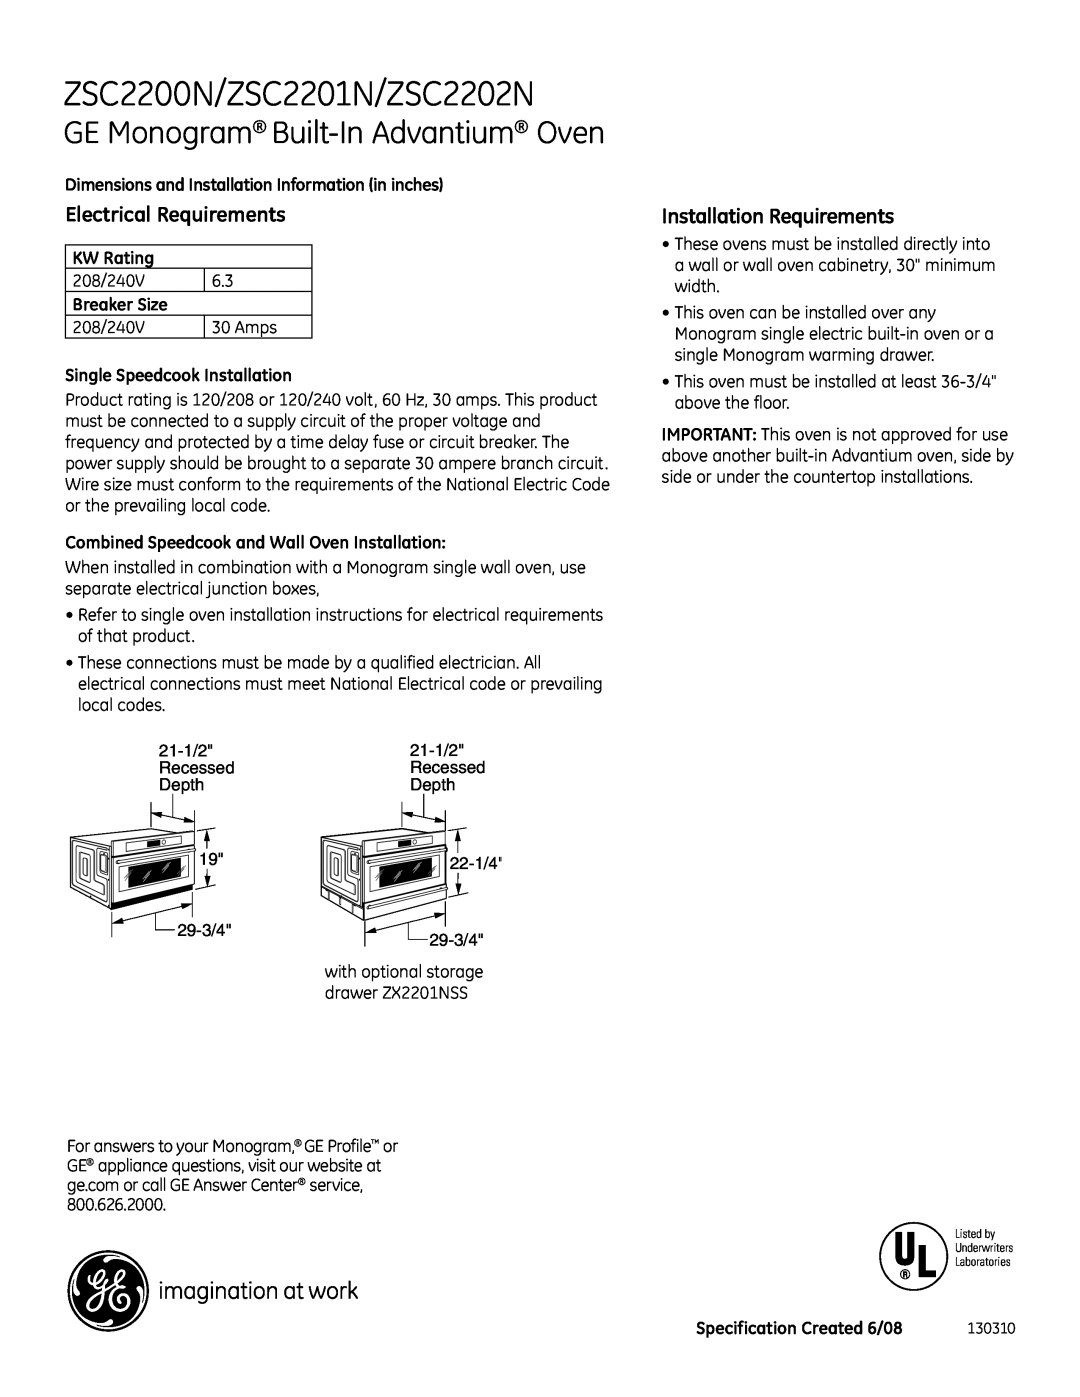 GE dimensions ZSC2200N/ZSC2201N/ZSC2202N, GE Monogram Built-In Advantium Oven, KW Rating, Breaker Size 